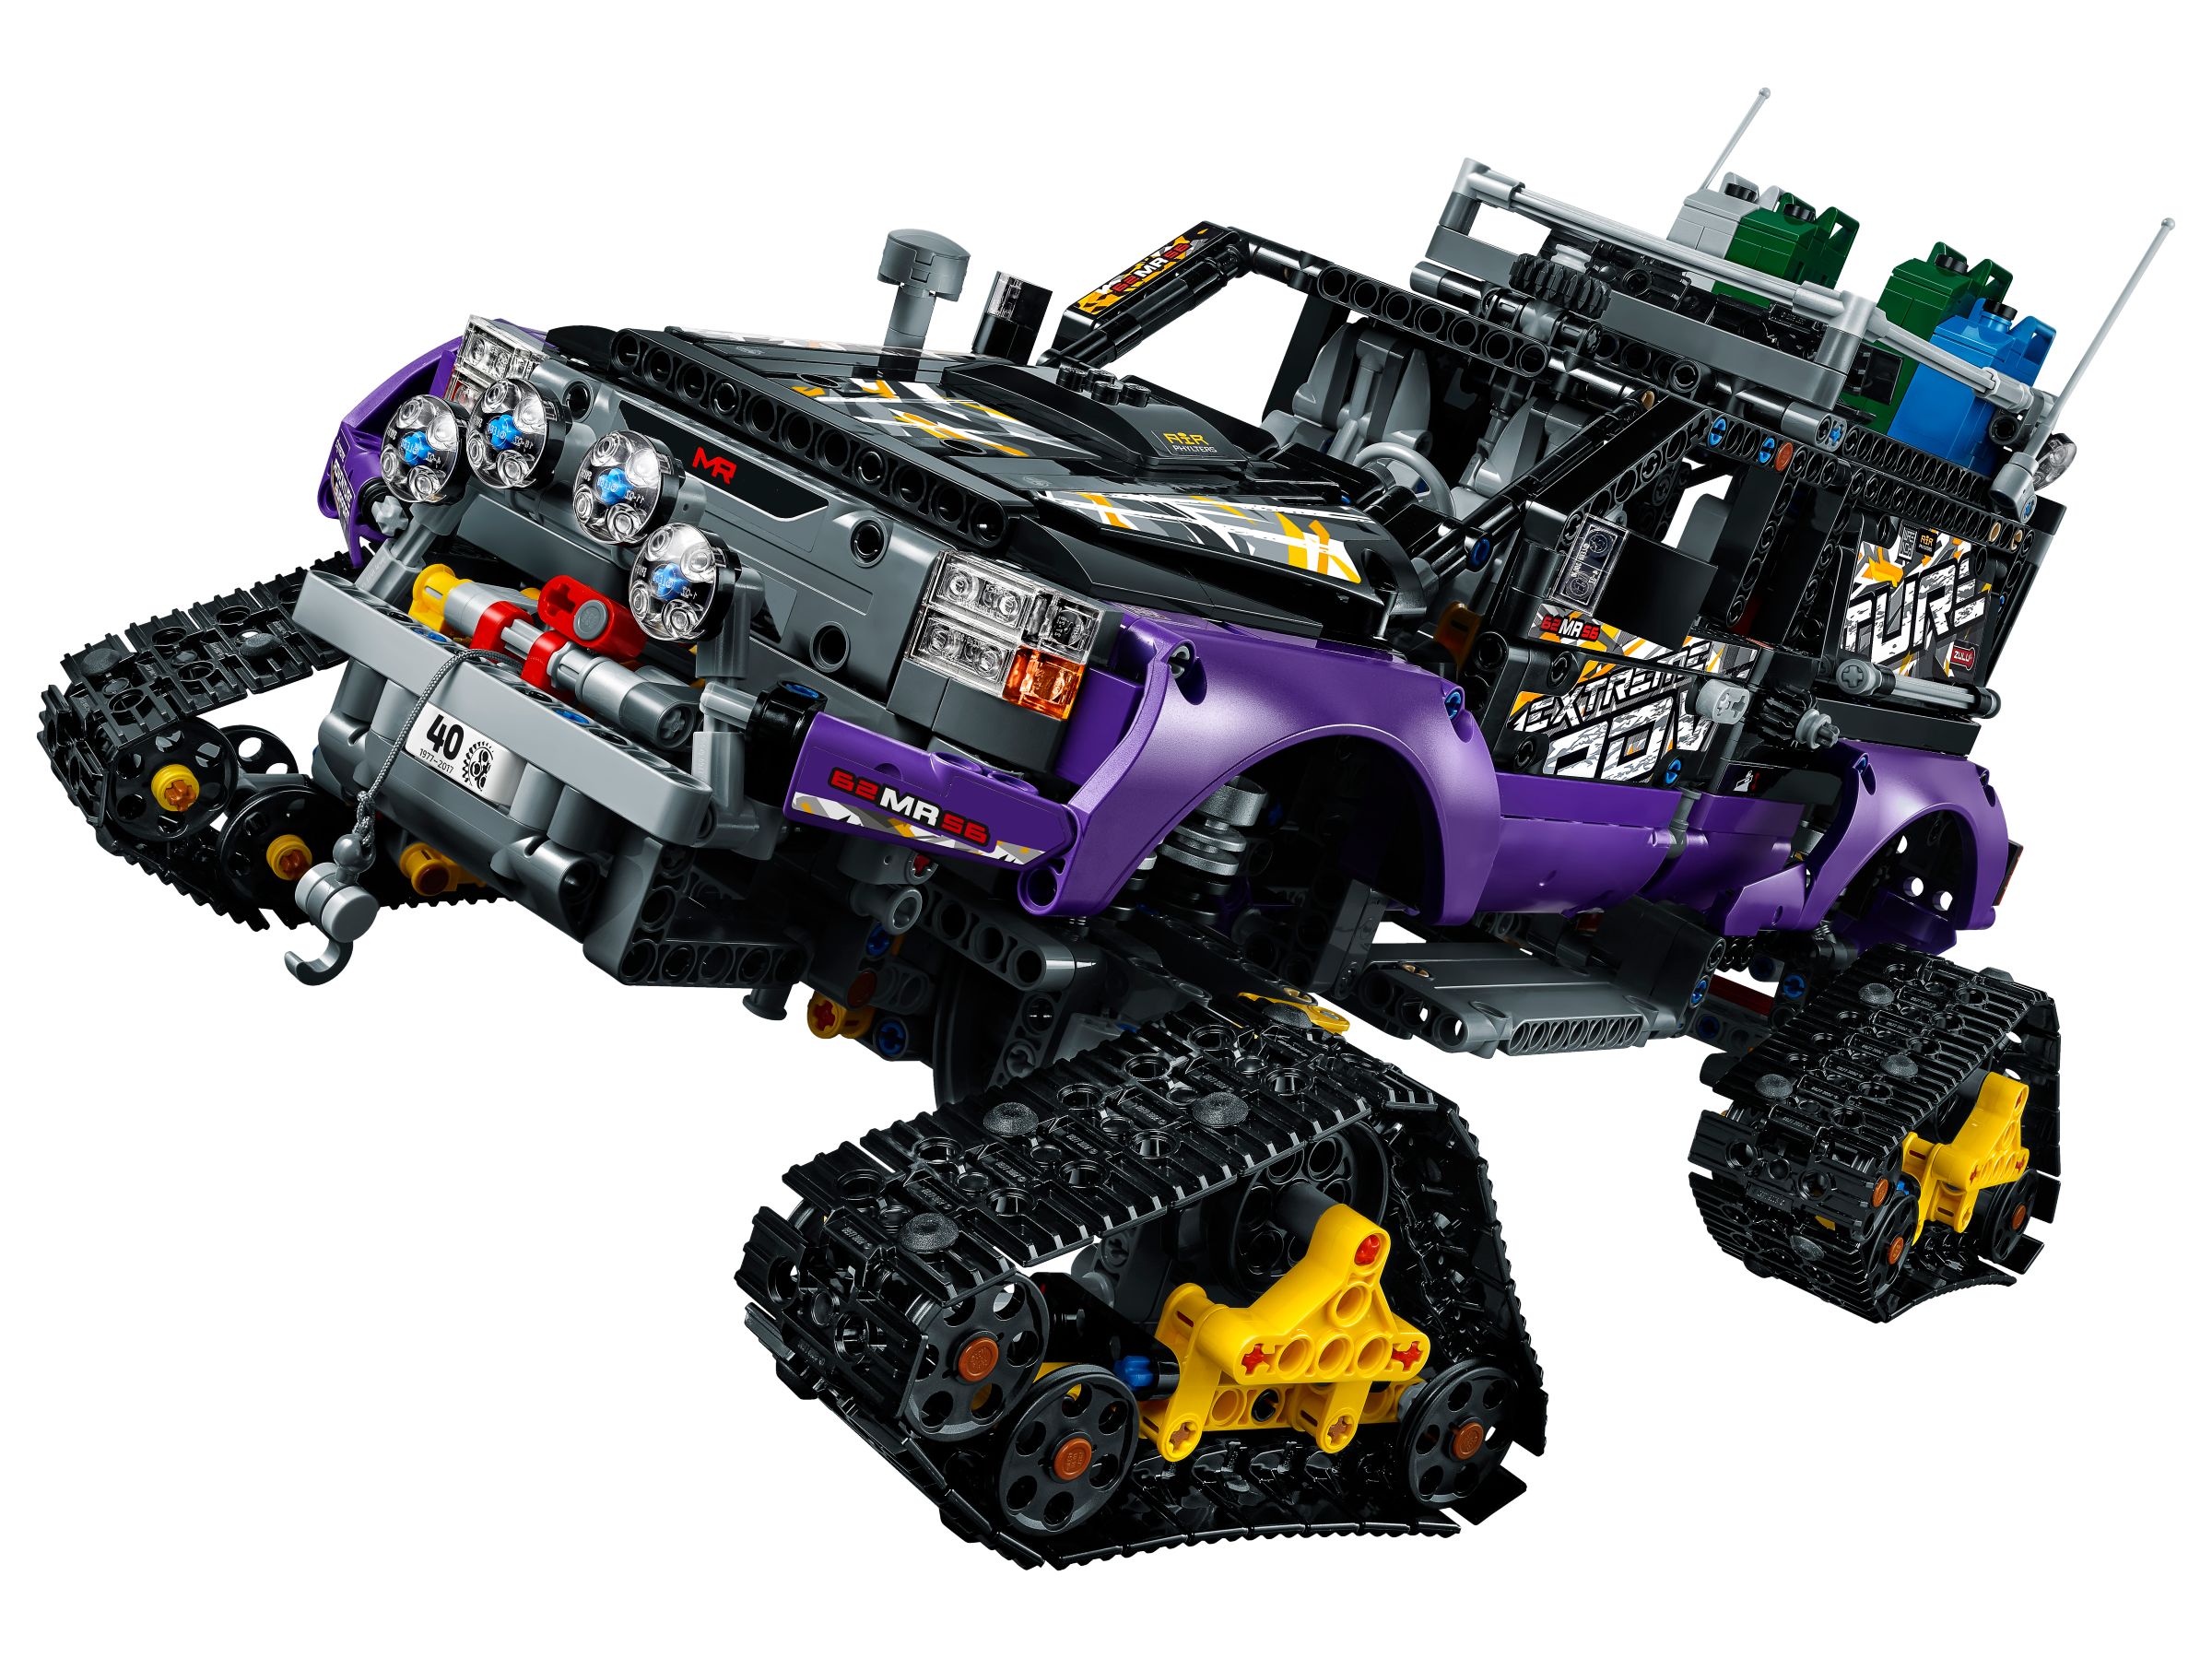 LEGO Technic 42069 Extremgeländefahrzeug LEGO_42069_alt2.jpg